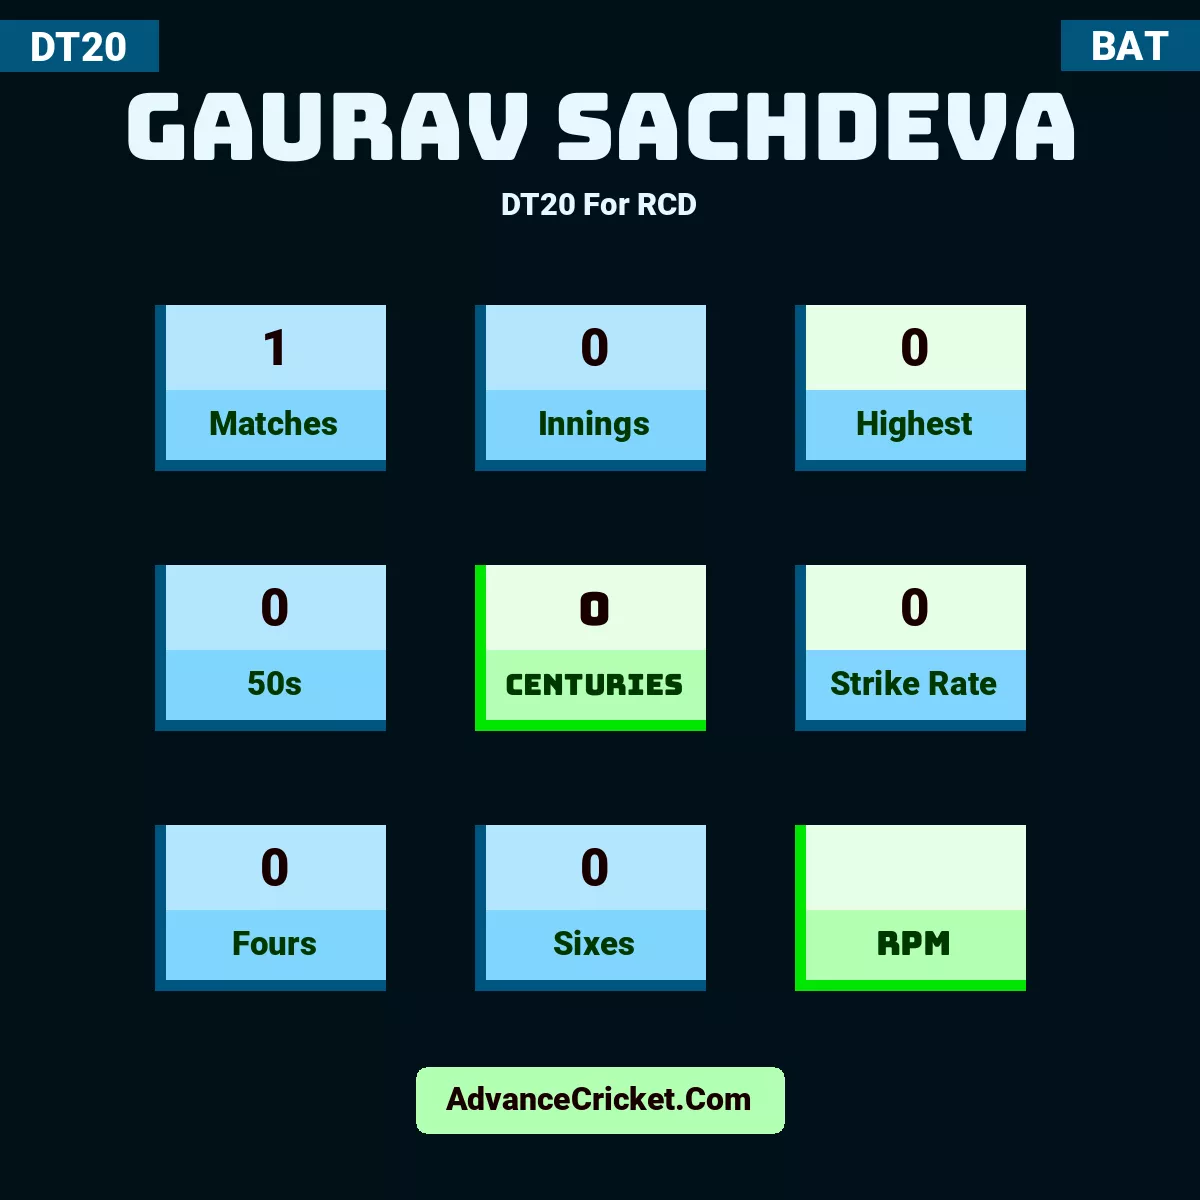 Gaurav Sachdeva DT20  For RCD, Gaurav Sachdeva played 1 matches, scored 0 runs as highest, 0 half-centuries, and 0 centuries, with a strike rate of 0. G.Sachdeva hit 0 fours and 0 sixes.